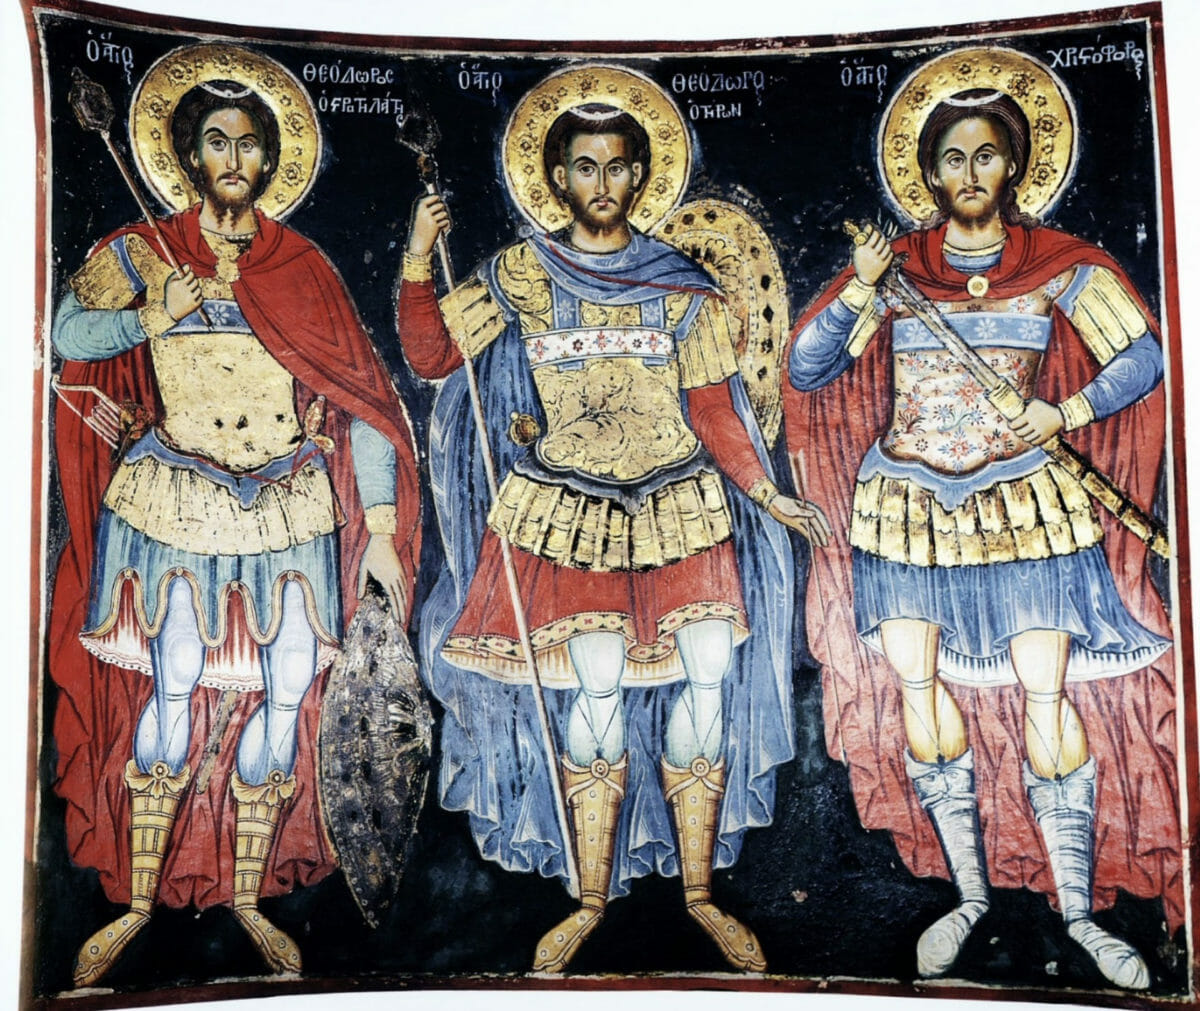 Third zone of the naos walls: The Warrior Saints - Theodore Stratilates, Theodore the Recruit, and Christoforos